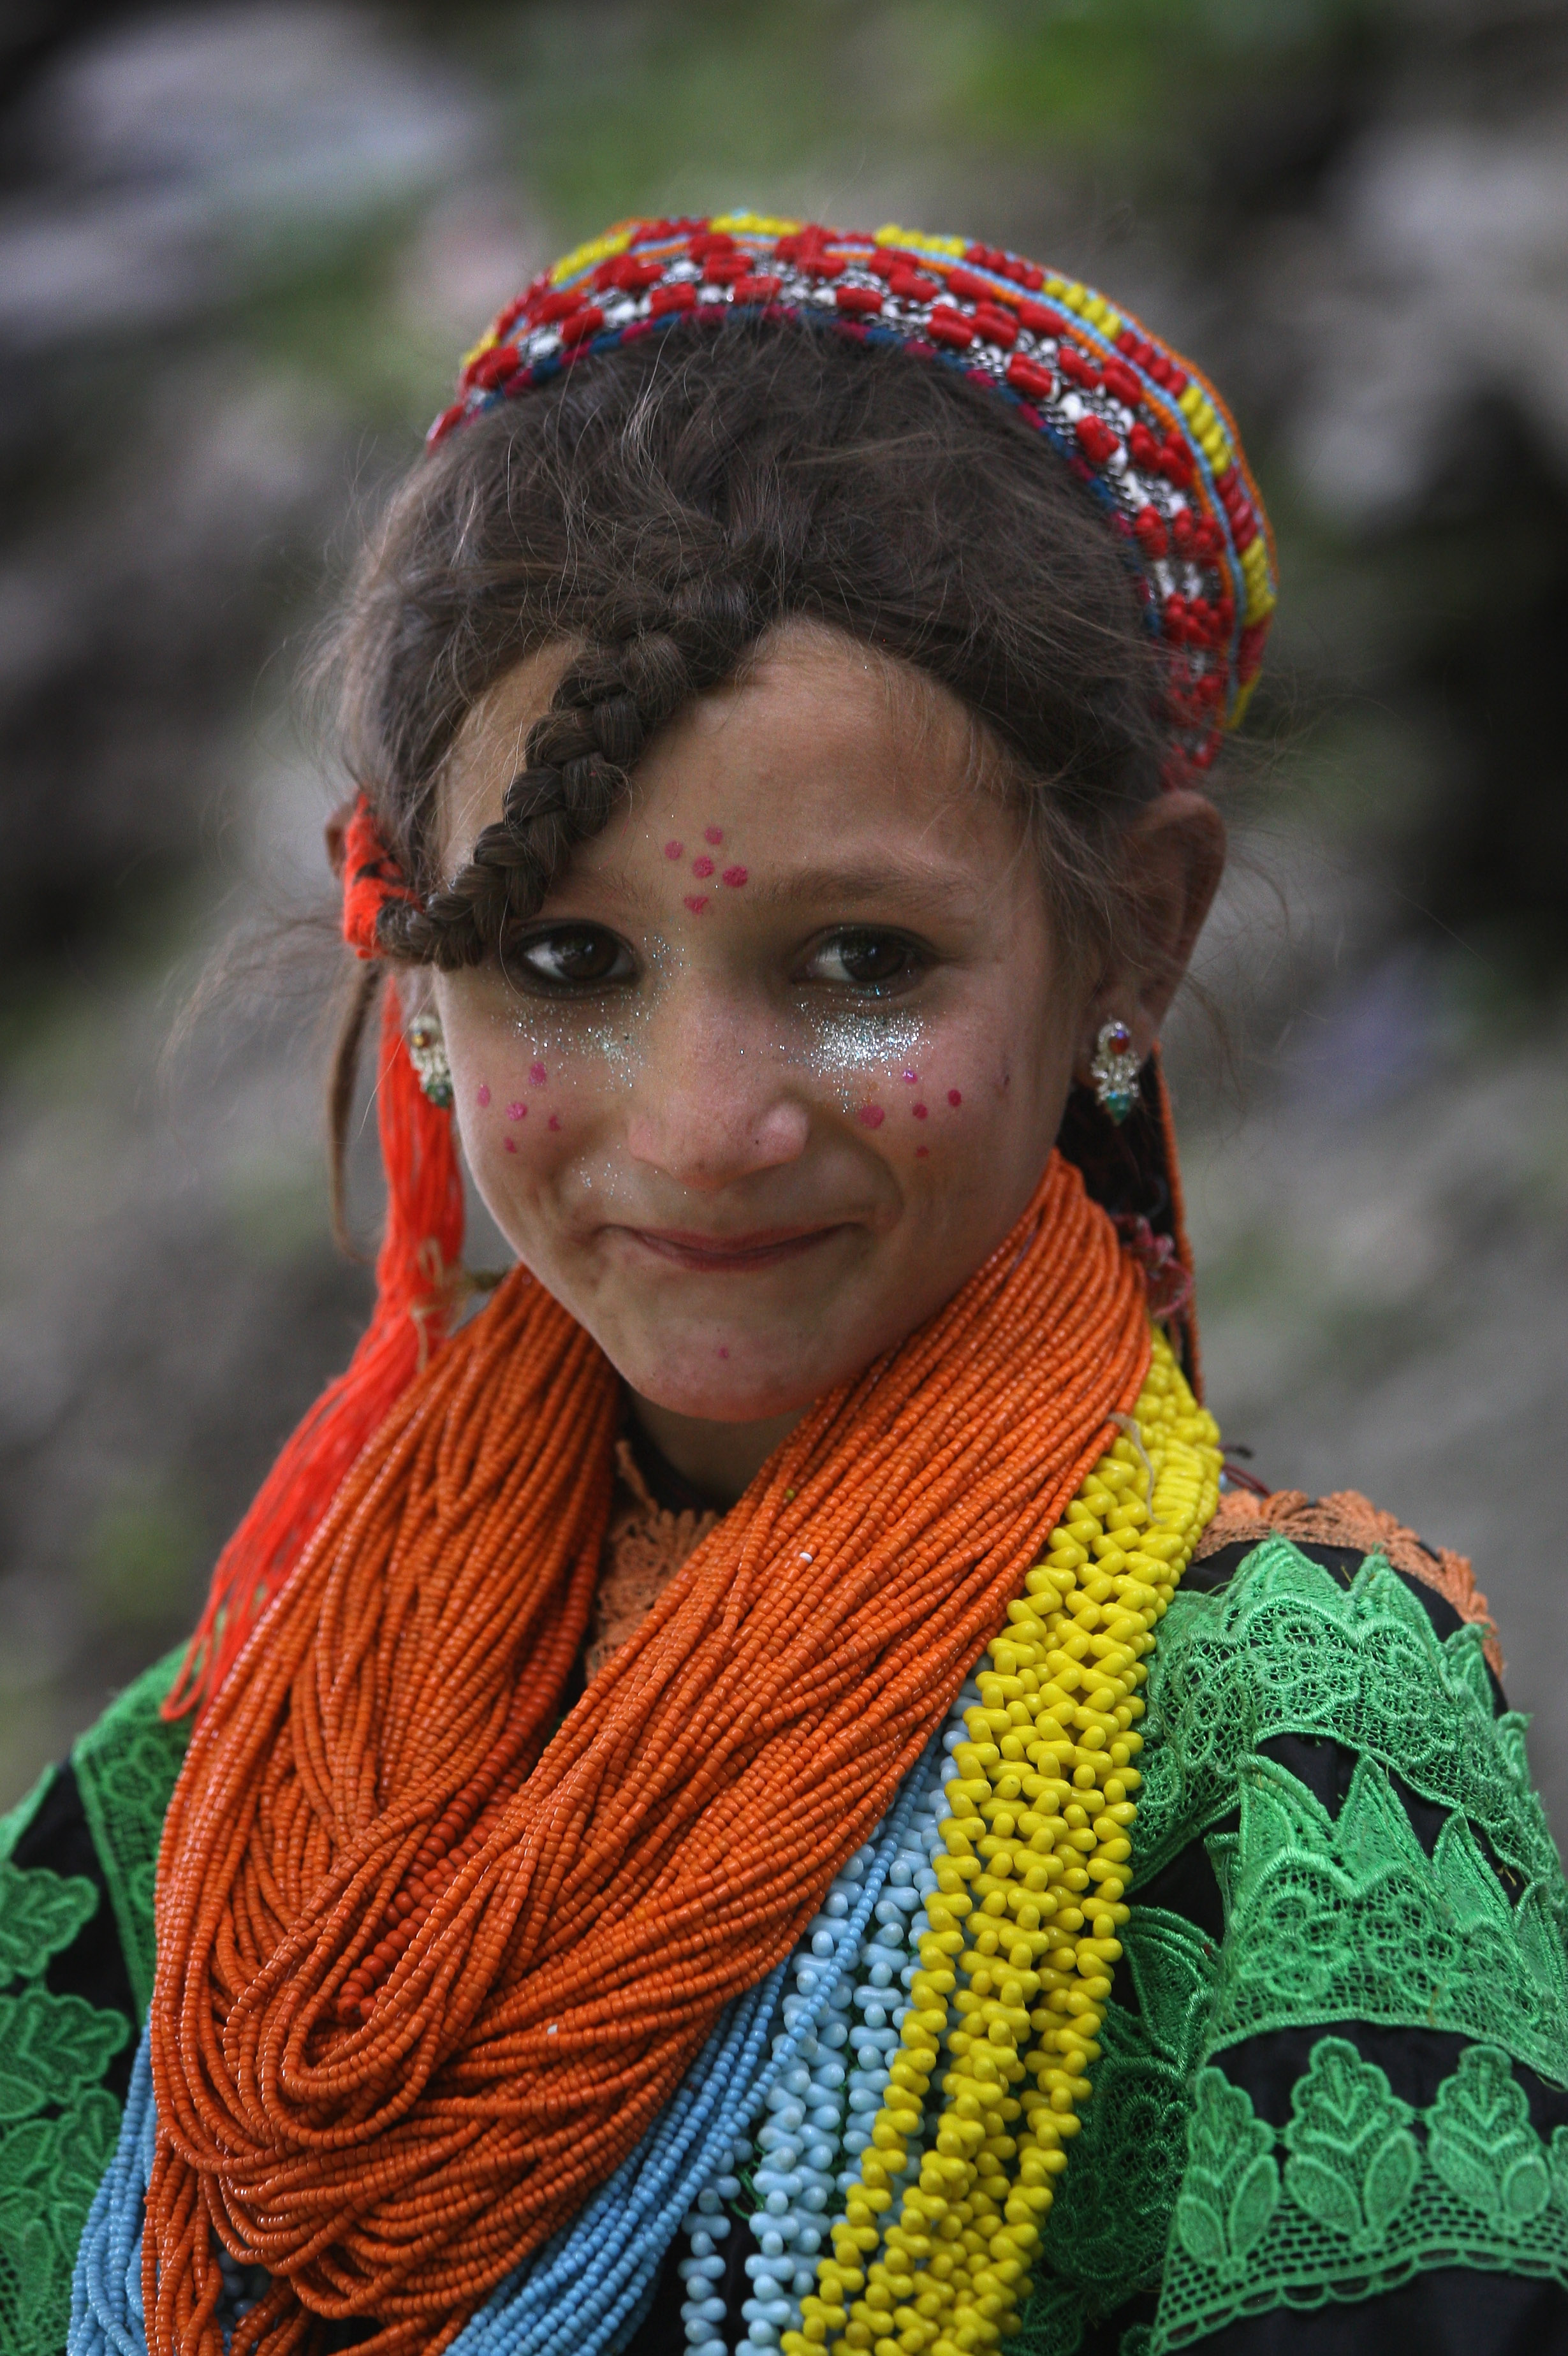 Picture It: The Polytheistic Kalash Tribe of Pakistan | POPSUGAR Love & Sex